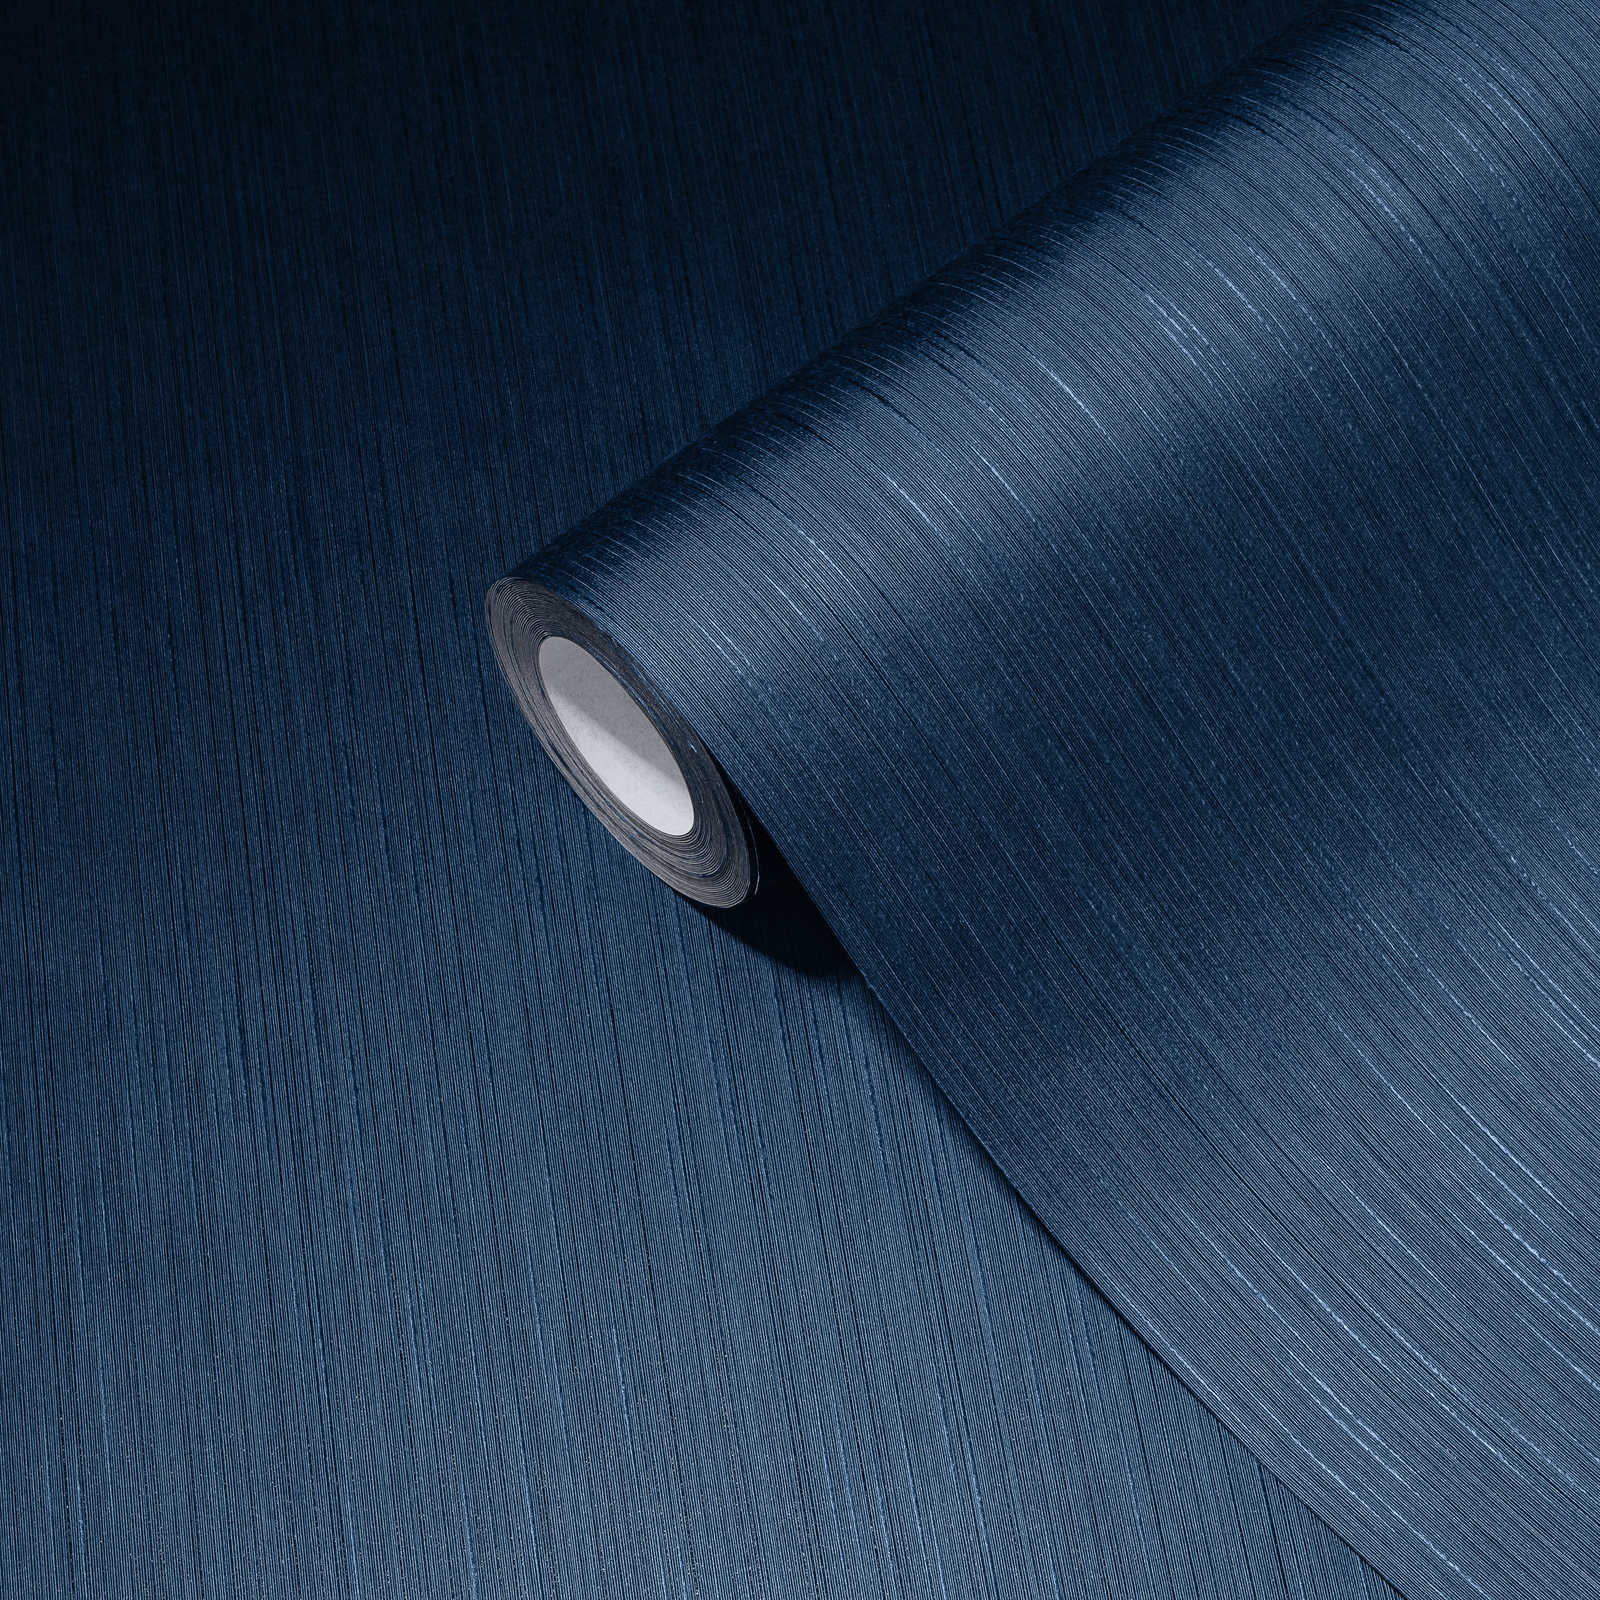             Uni Vliestapete mit liniertem Strukturmuster – Blau
        